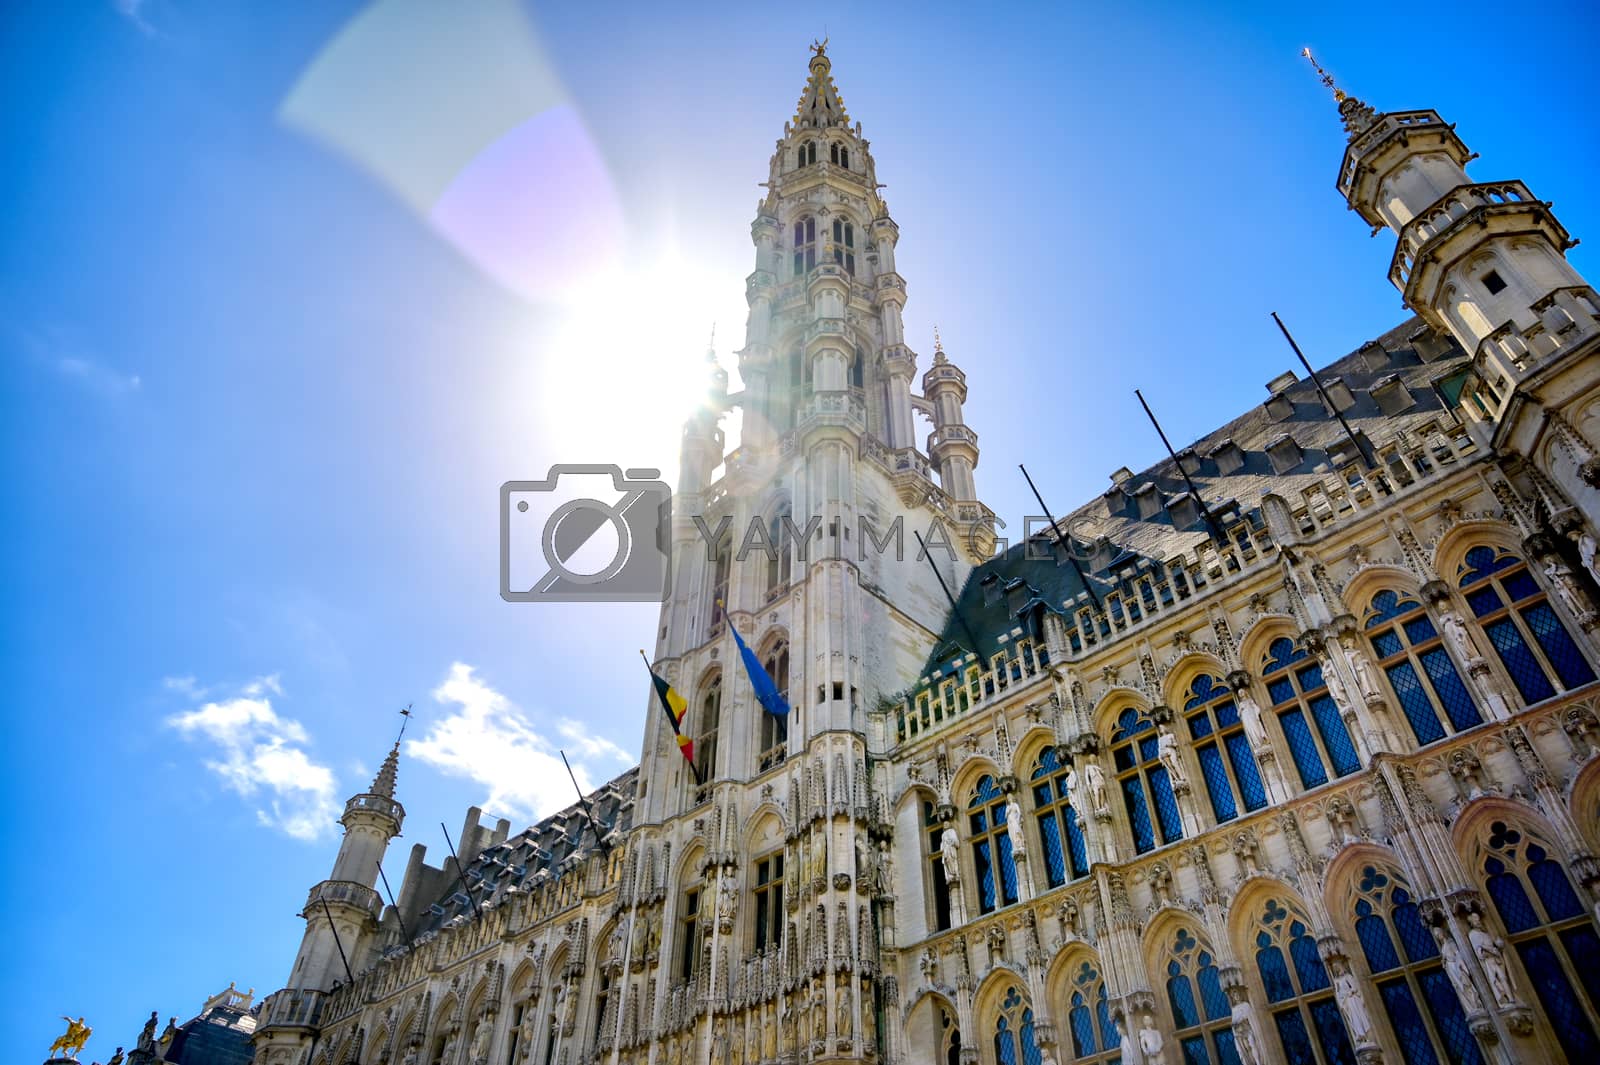 Royalty free image of Town Hall in Brussels, Belgium by jbyard22